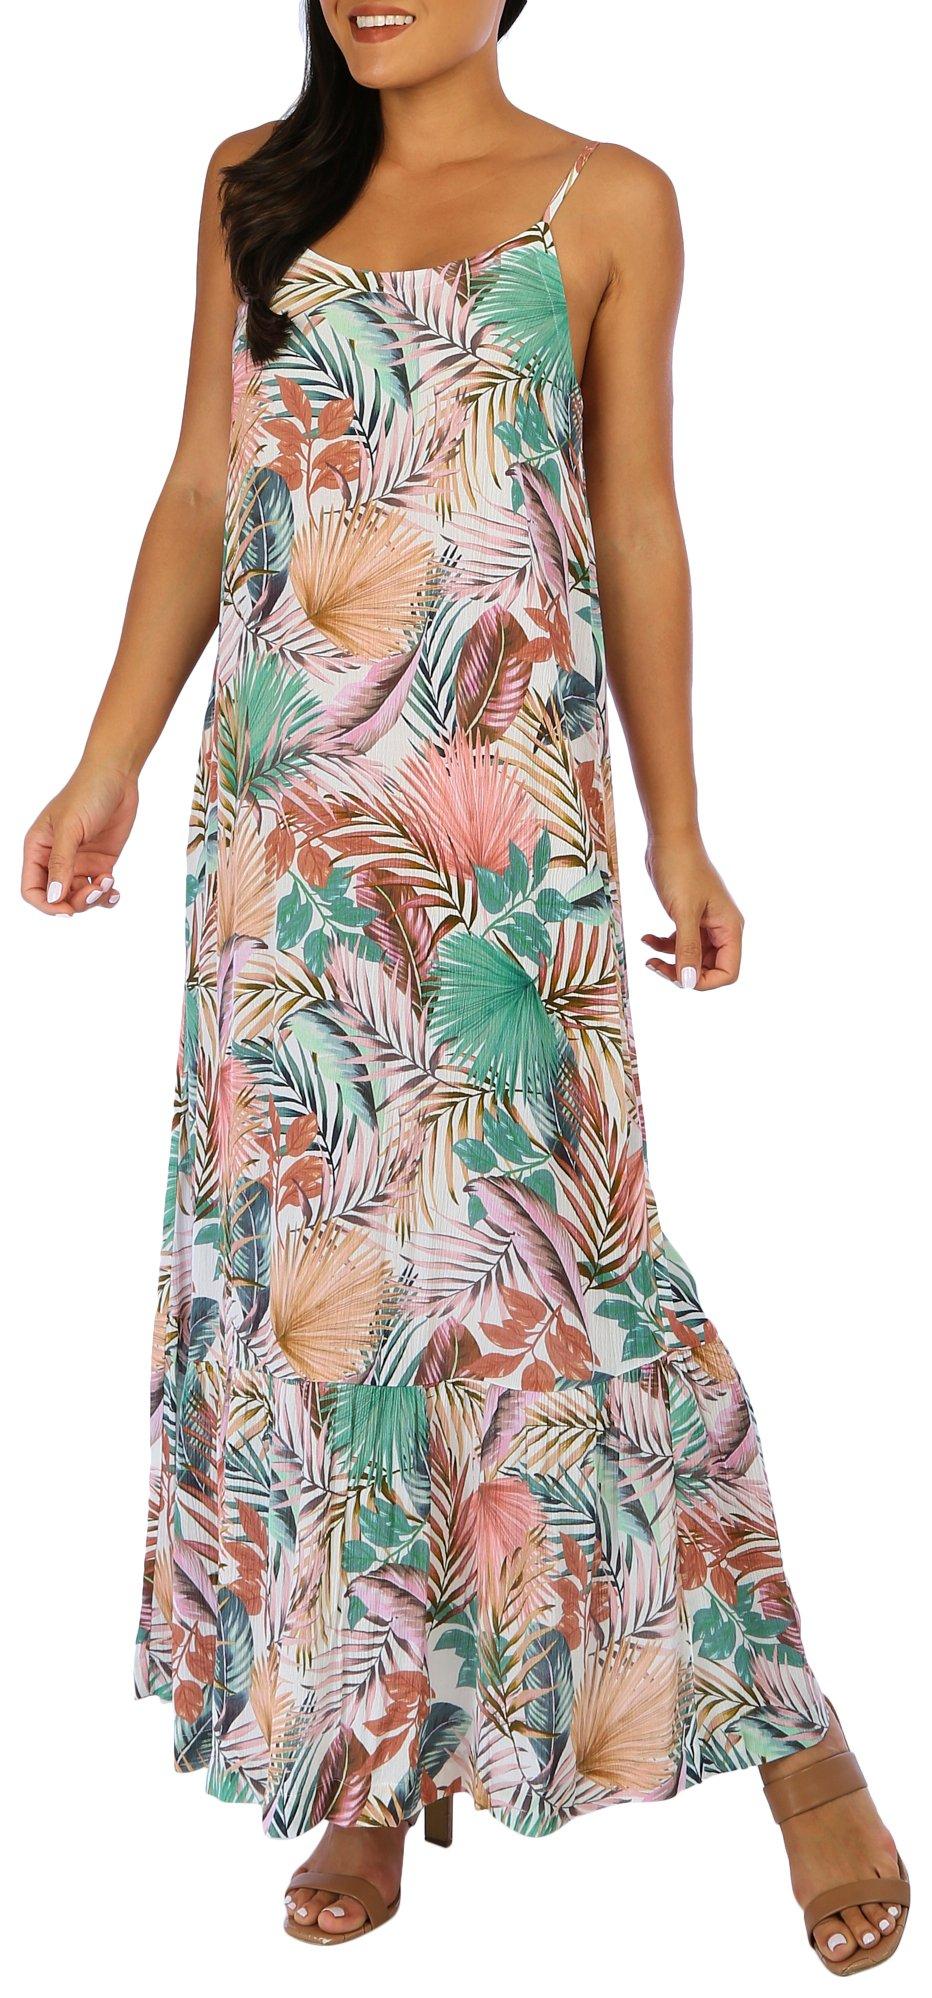 Hurley Juniors Tropical Sleeveless Maxi Dress